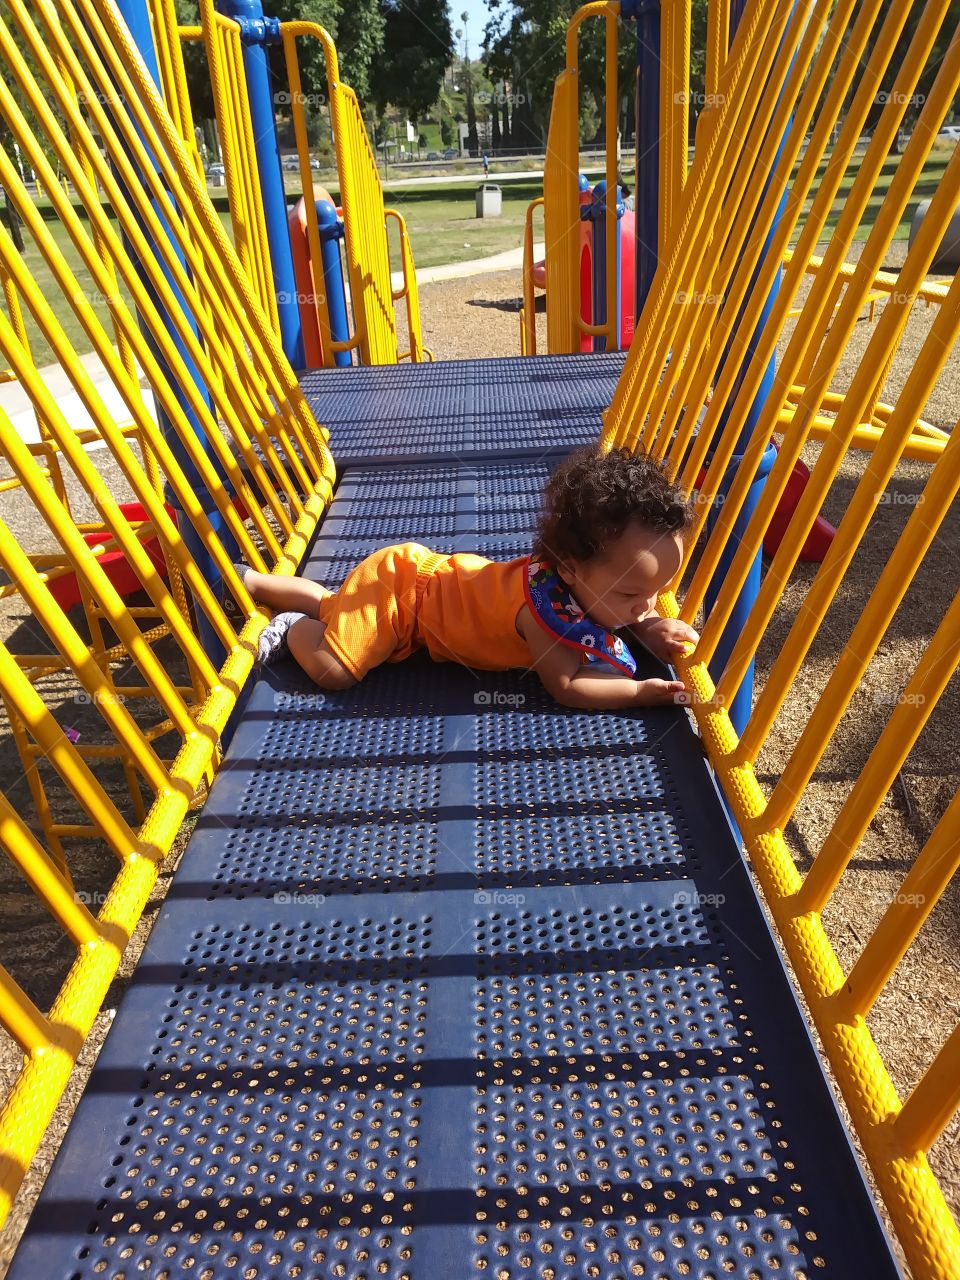 My son Kody playing at the park in loma linda California